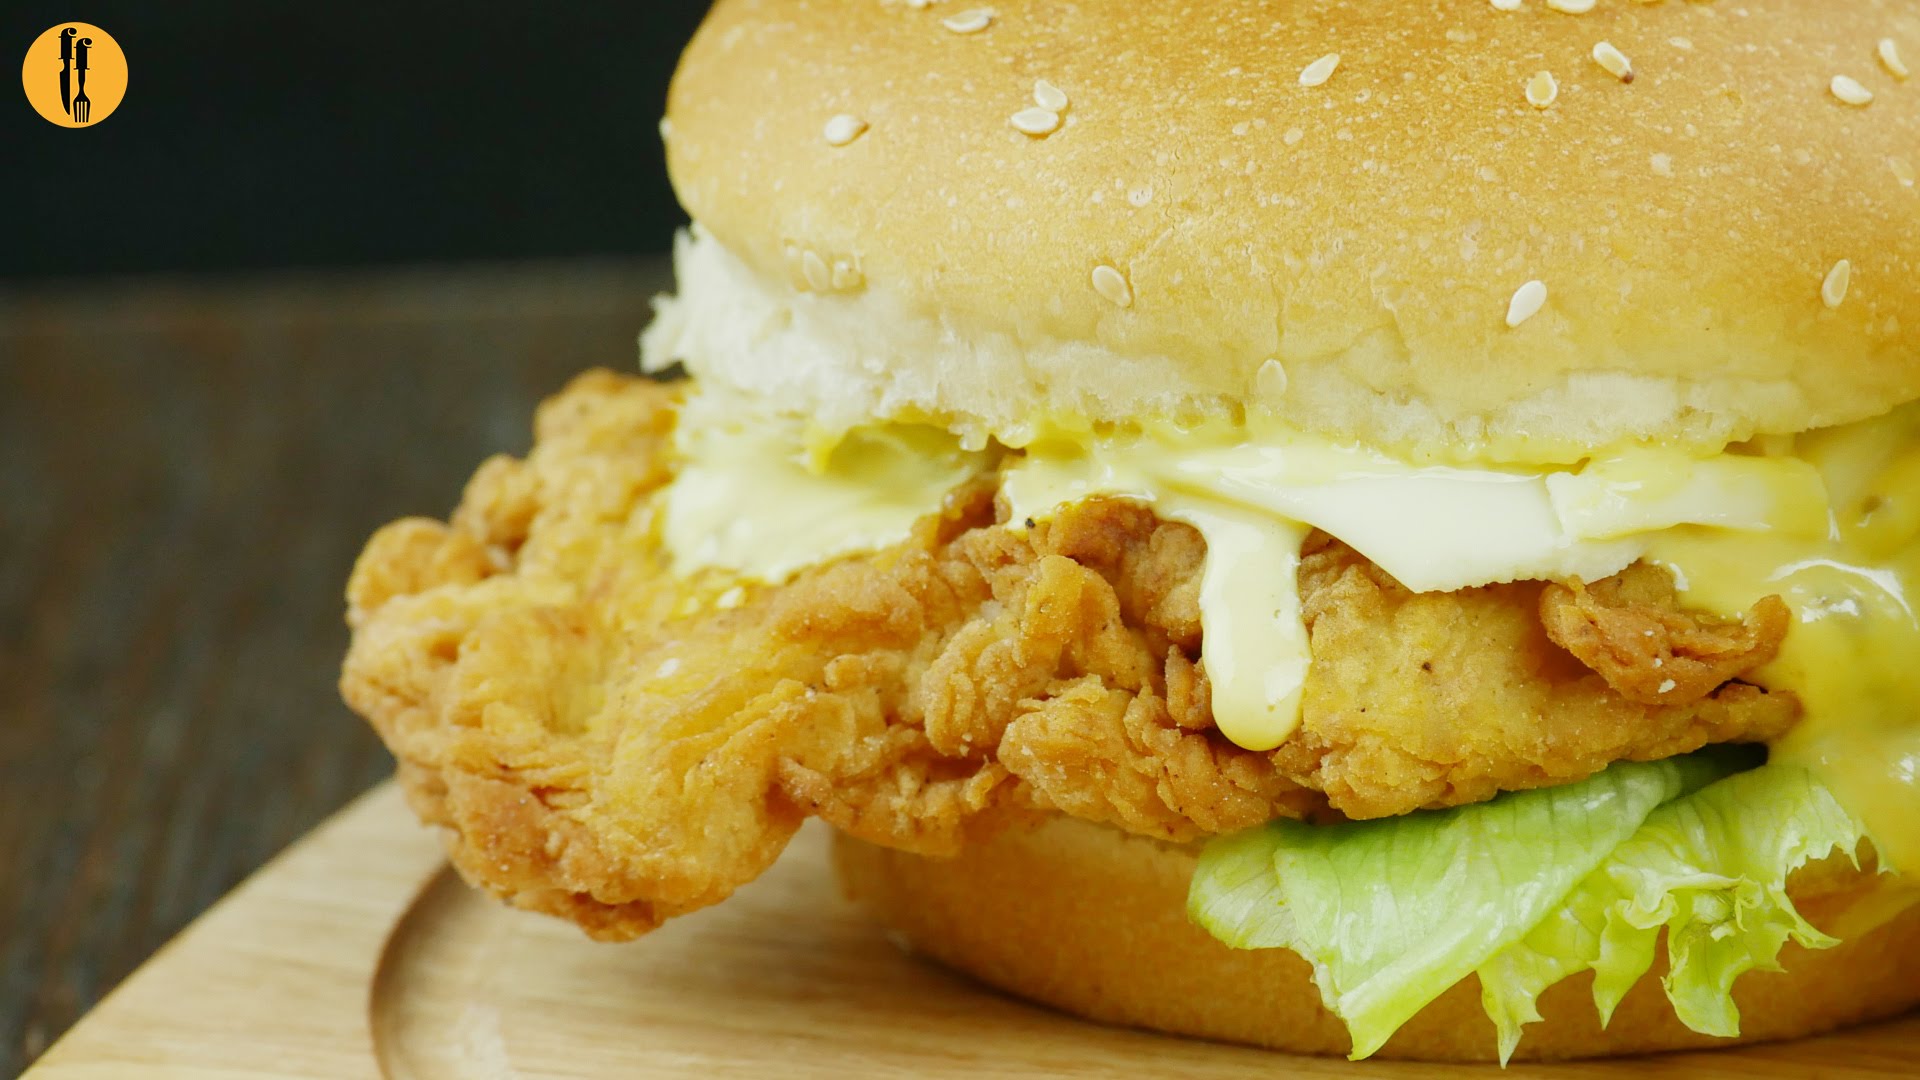 Crispy Chicken Burger Recipe Its better than a Zinger  - Food Fusion